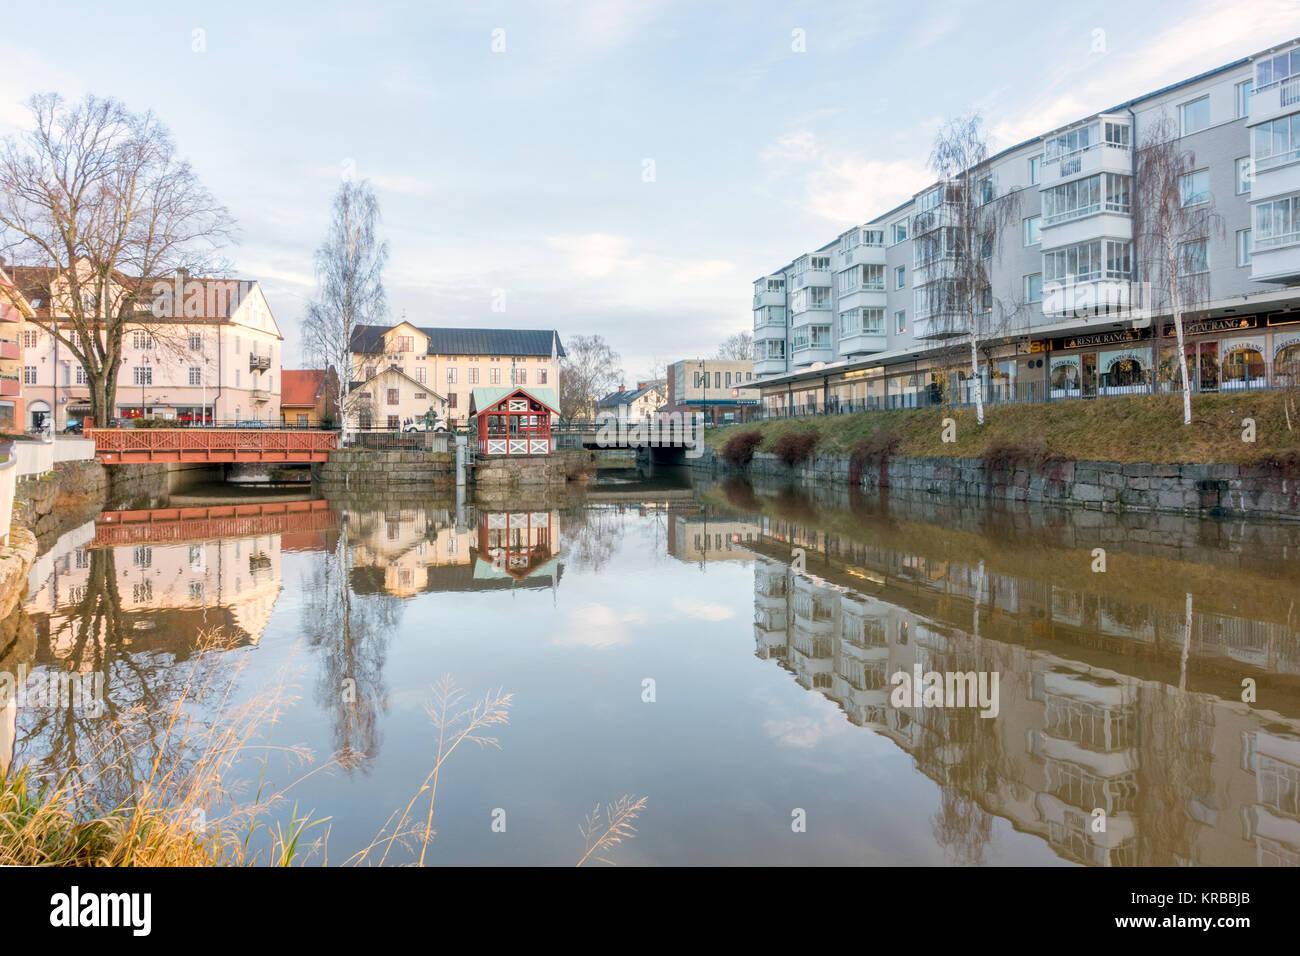 Mjolby, Svezia- Novembre 30th, 2017: Mjolby centro città dal fiume svartan kalled Foto Stock